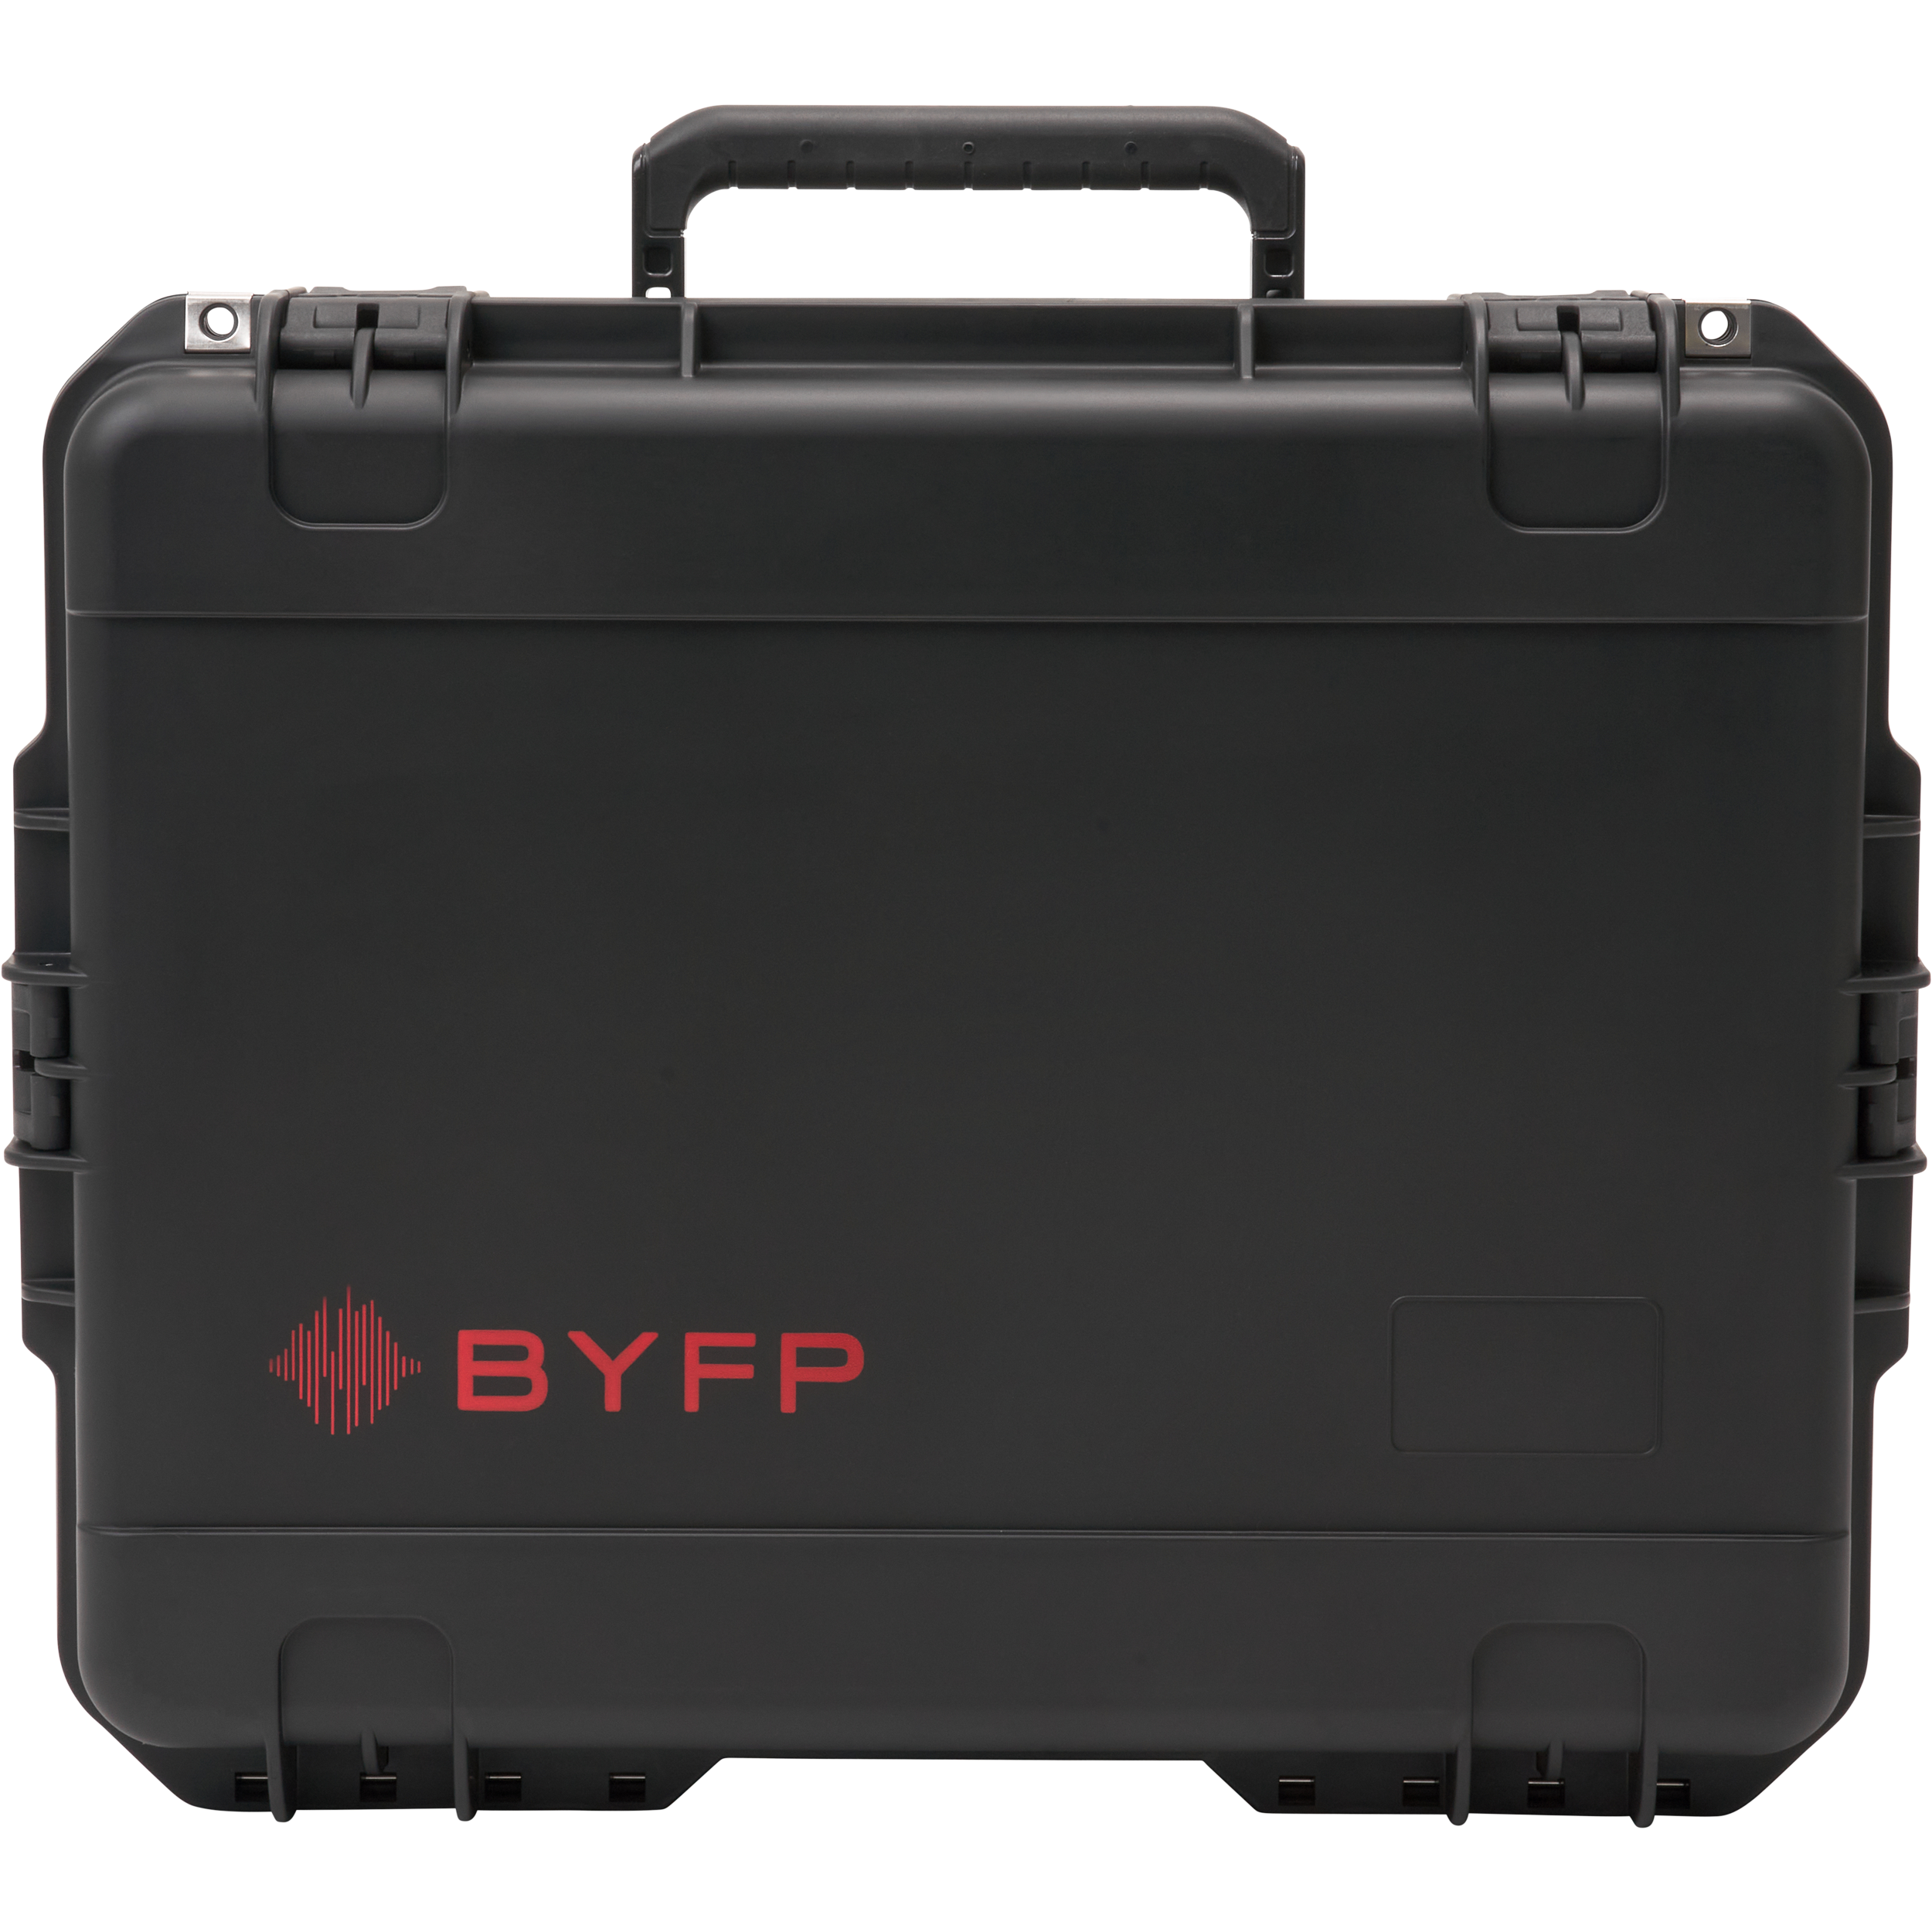 BYFP ipCase for 2x Chauvet Intimidator Q-60 Beam